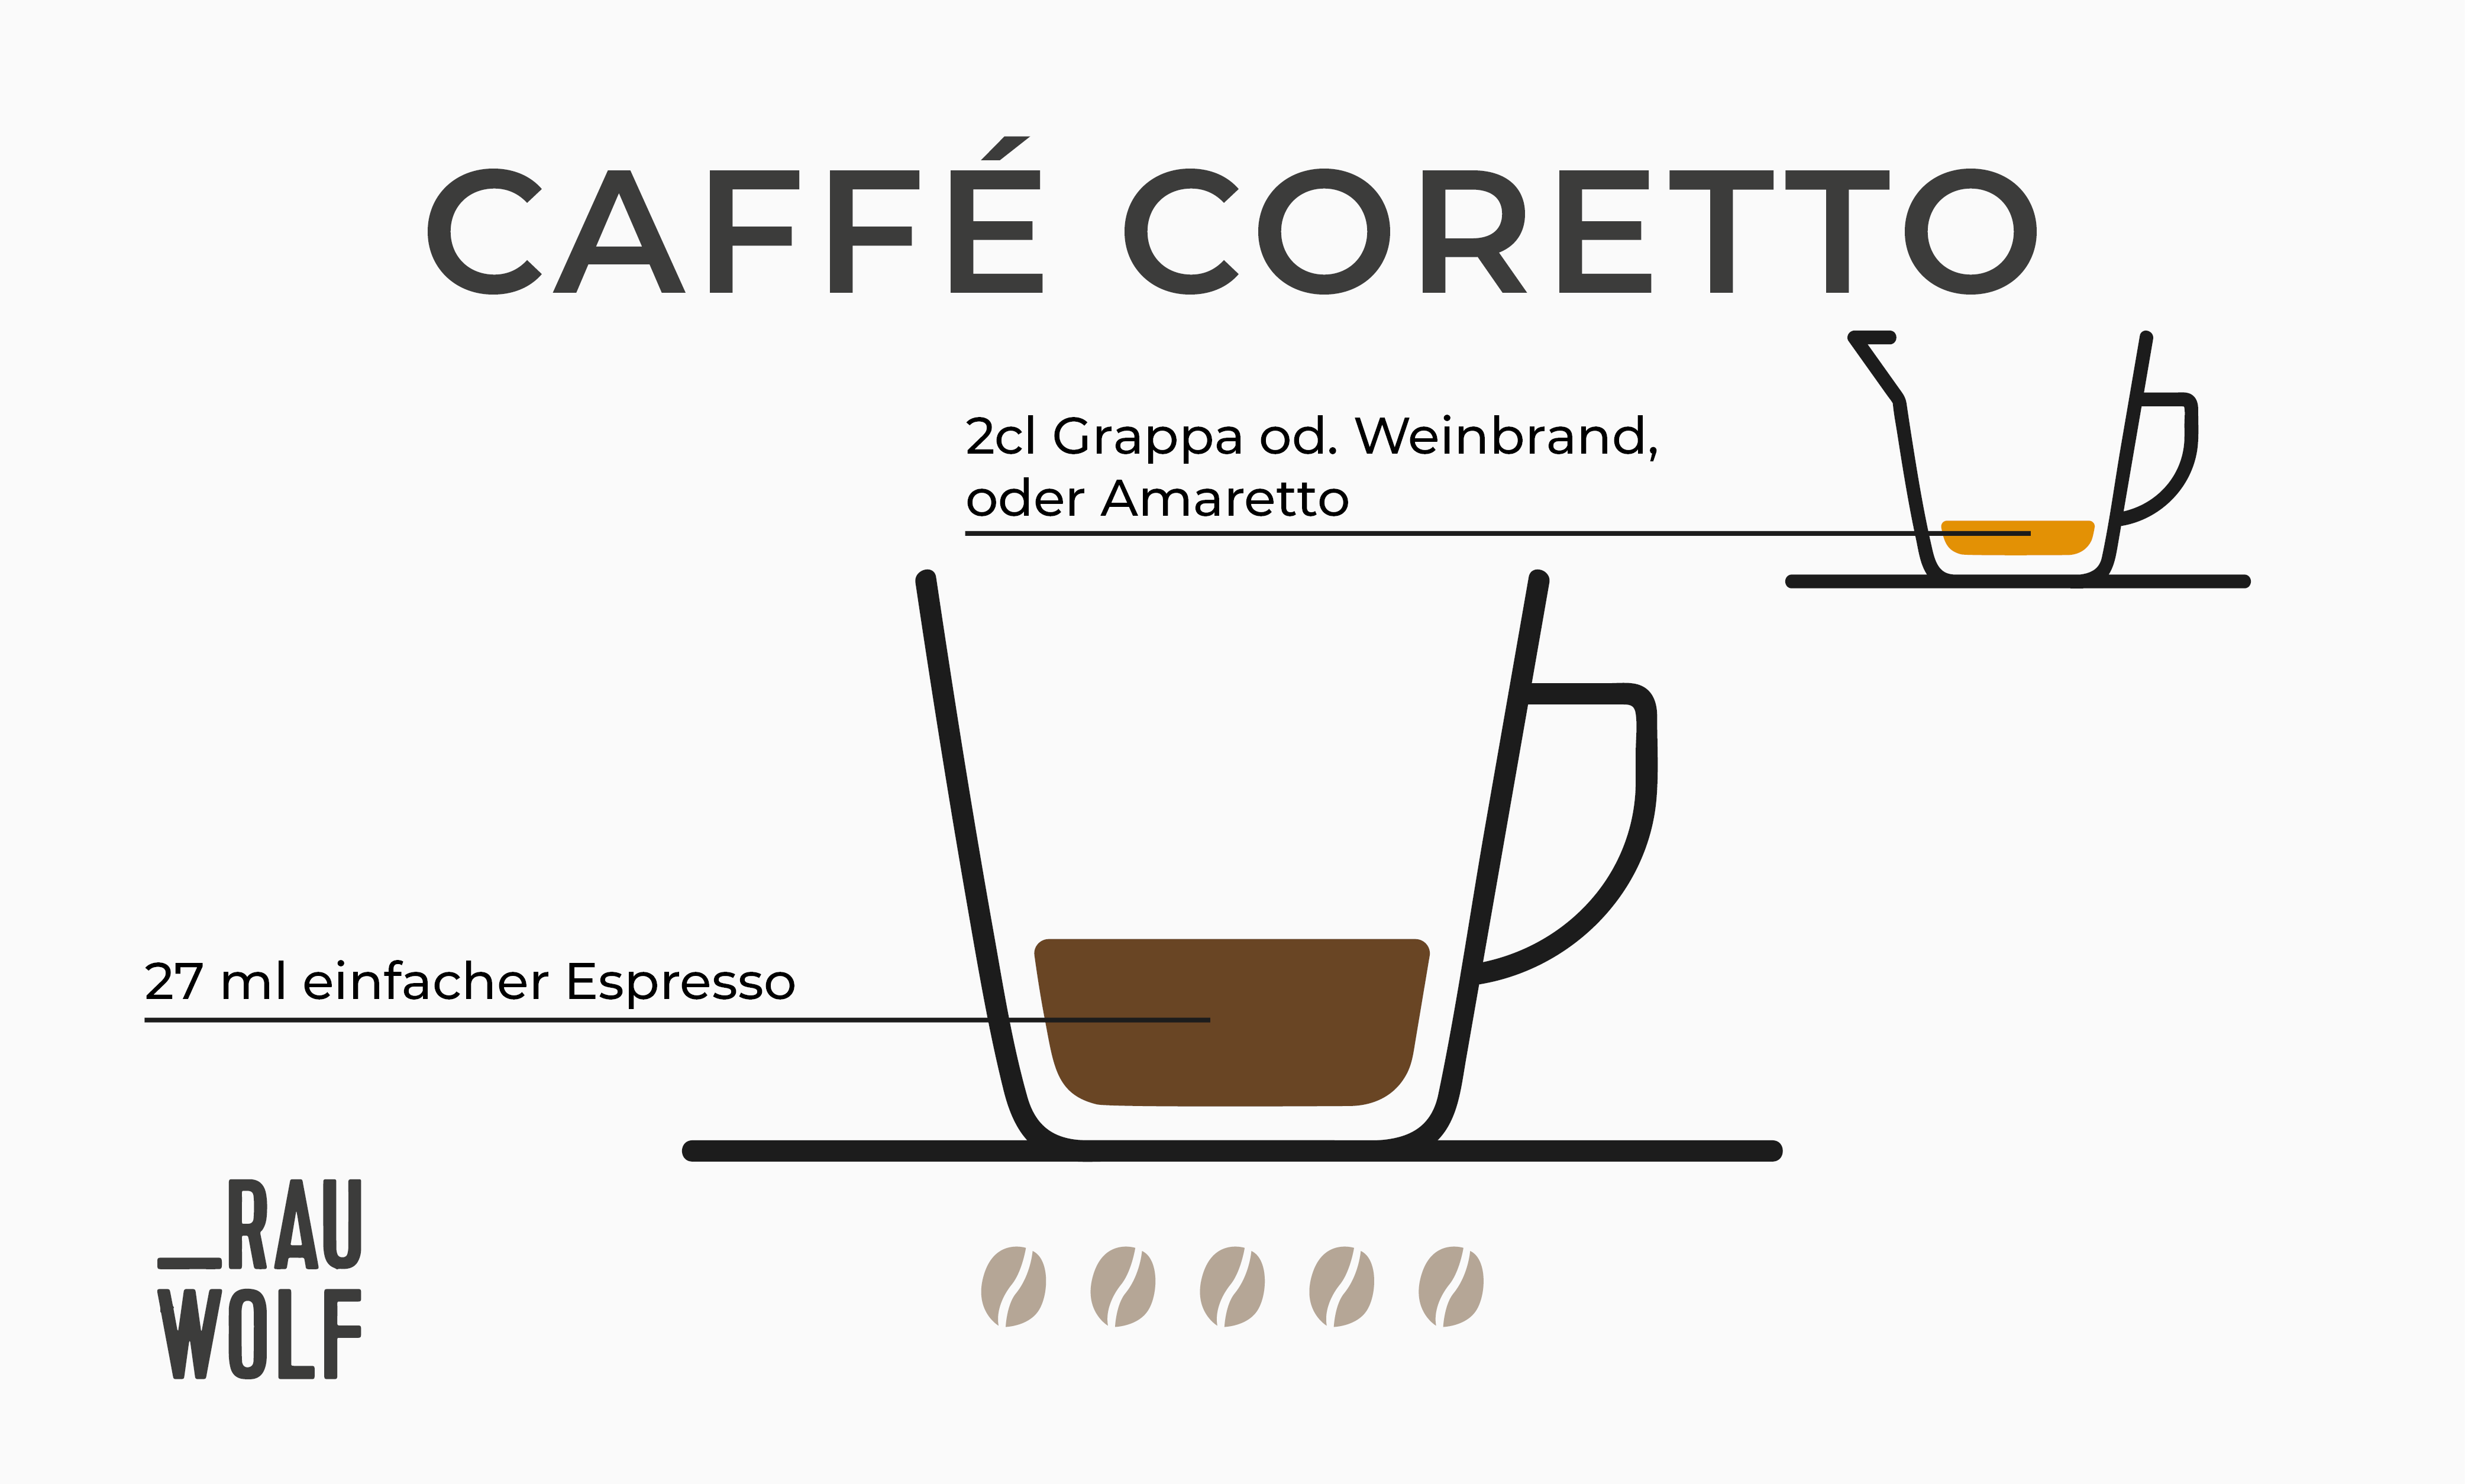 Kaffee mit Schuss: Caffé Corretto